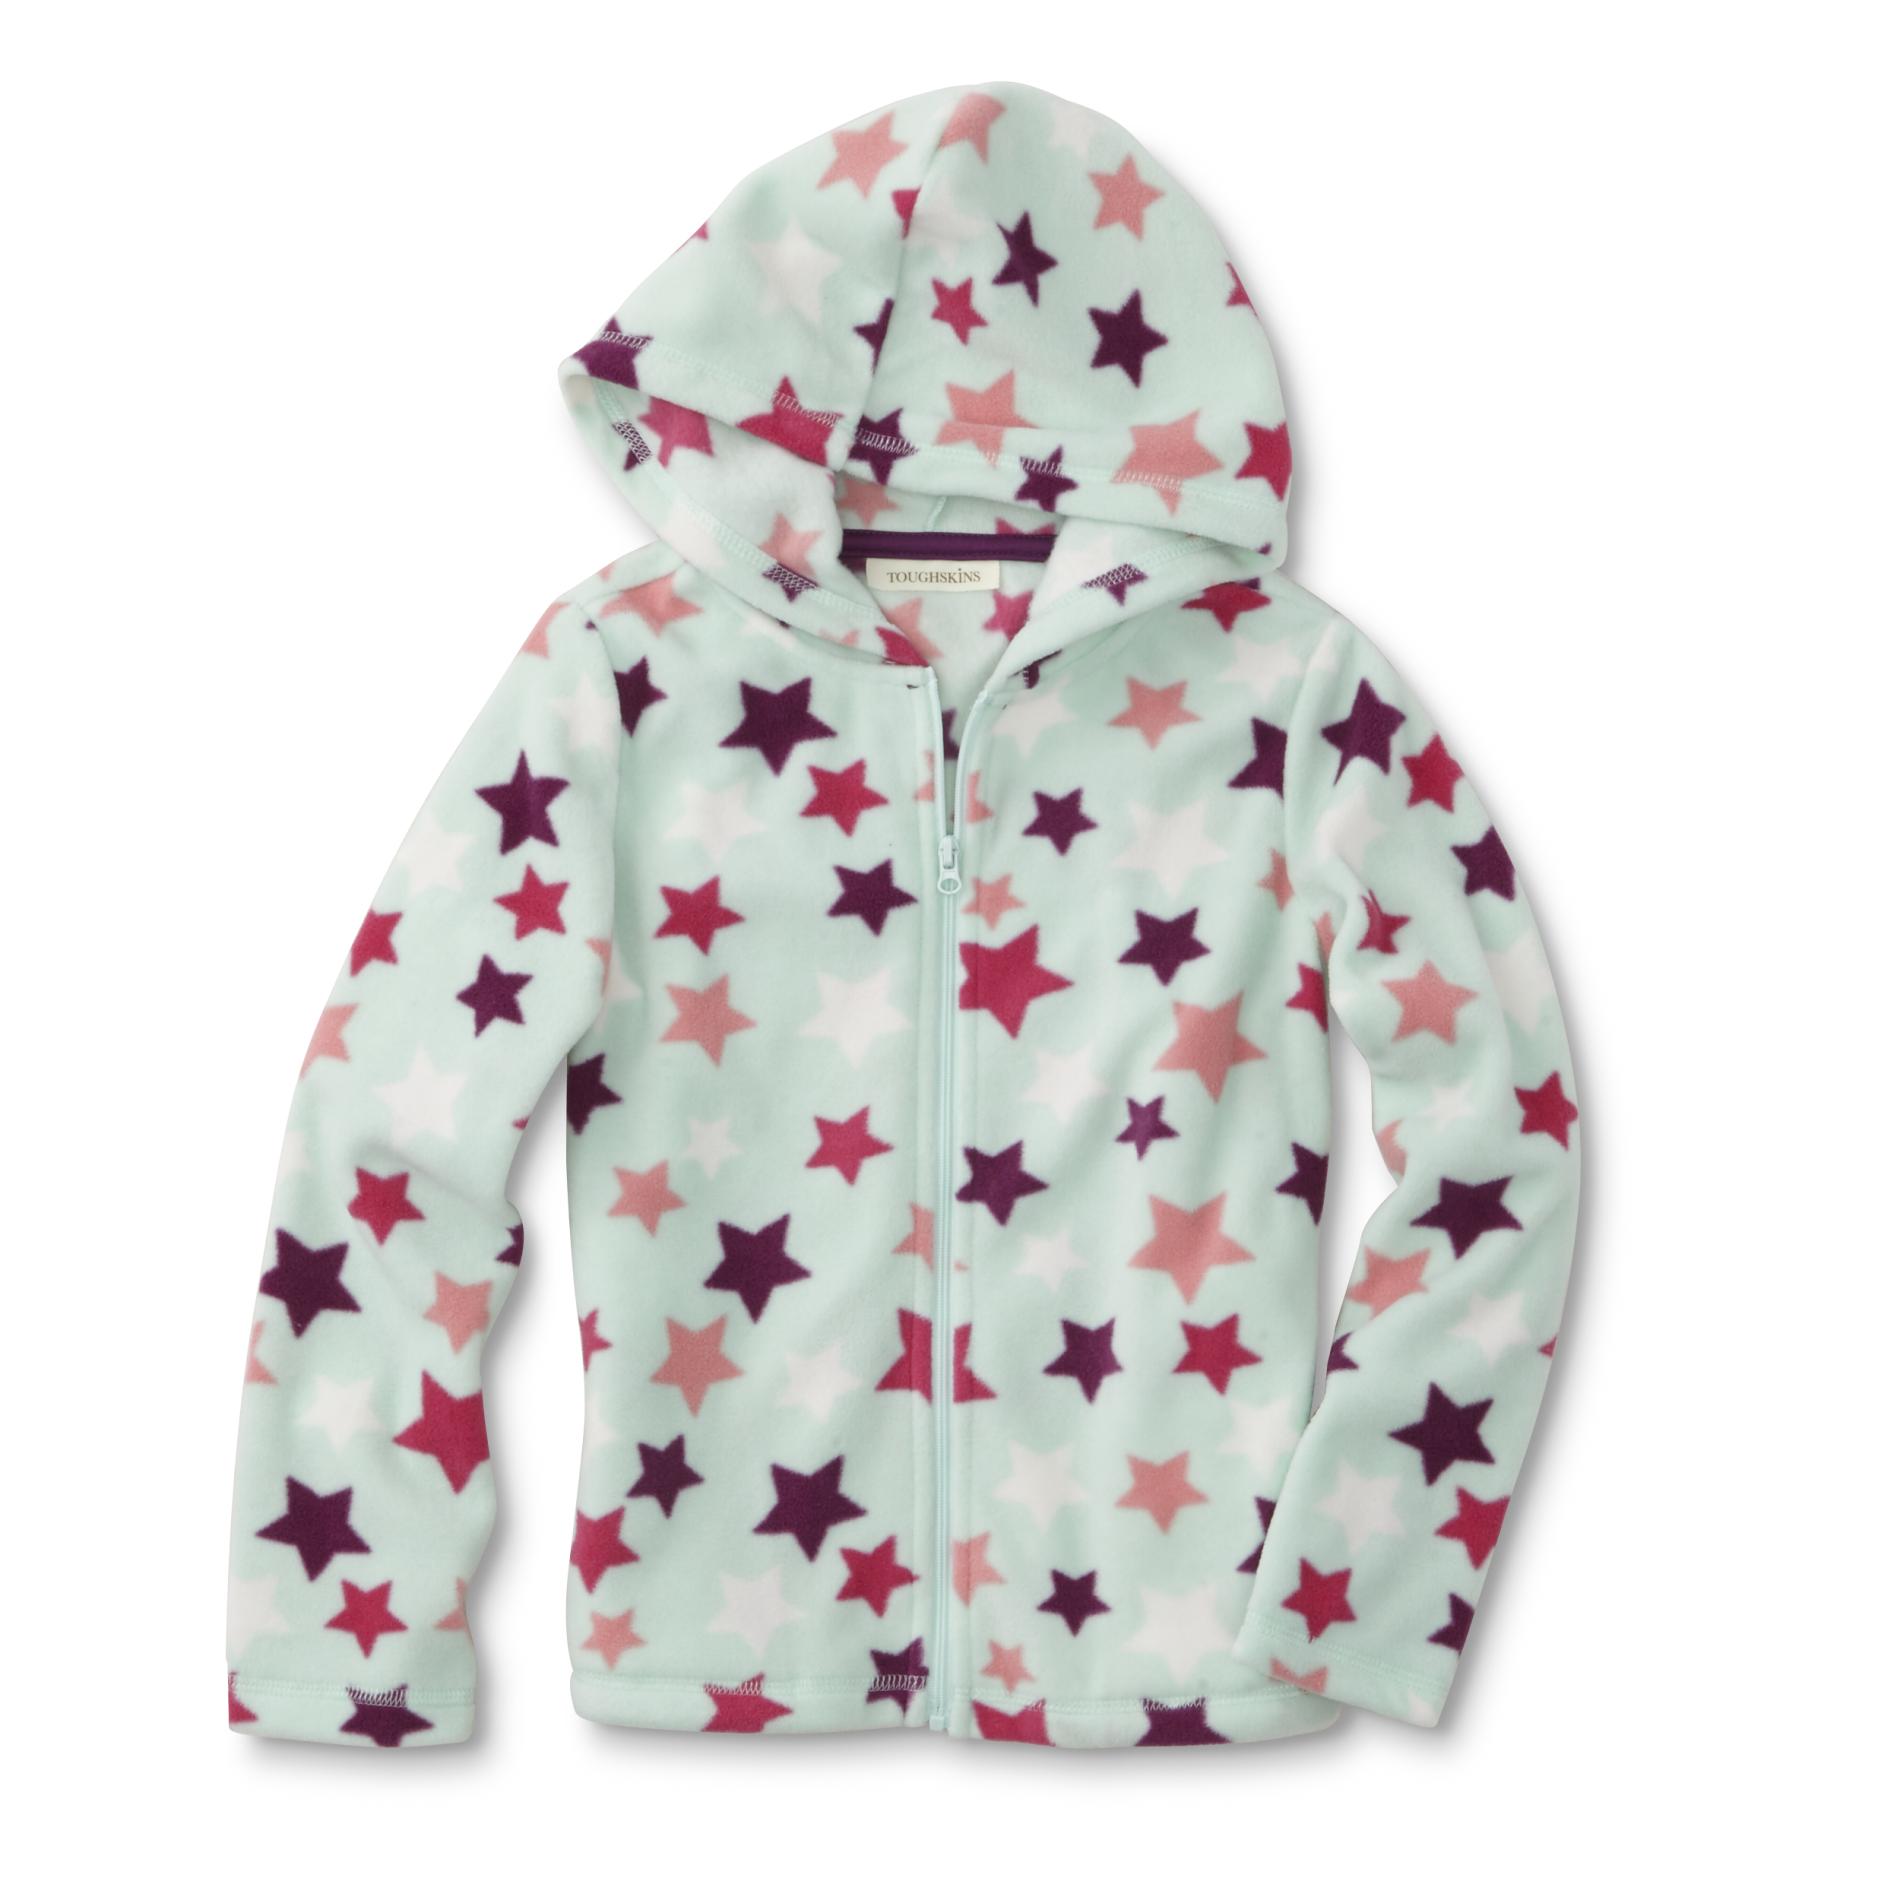 Toughskins Infant & Toddler Girls' Fleece Hoodie Jacket - Stars